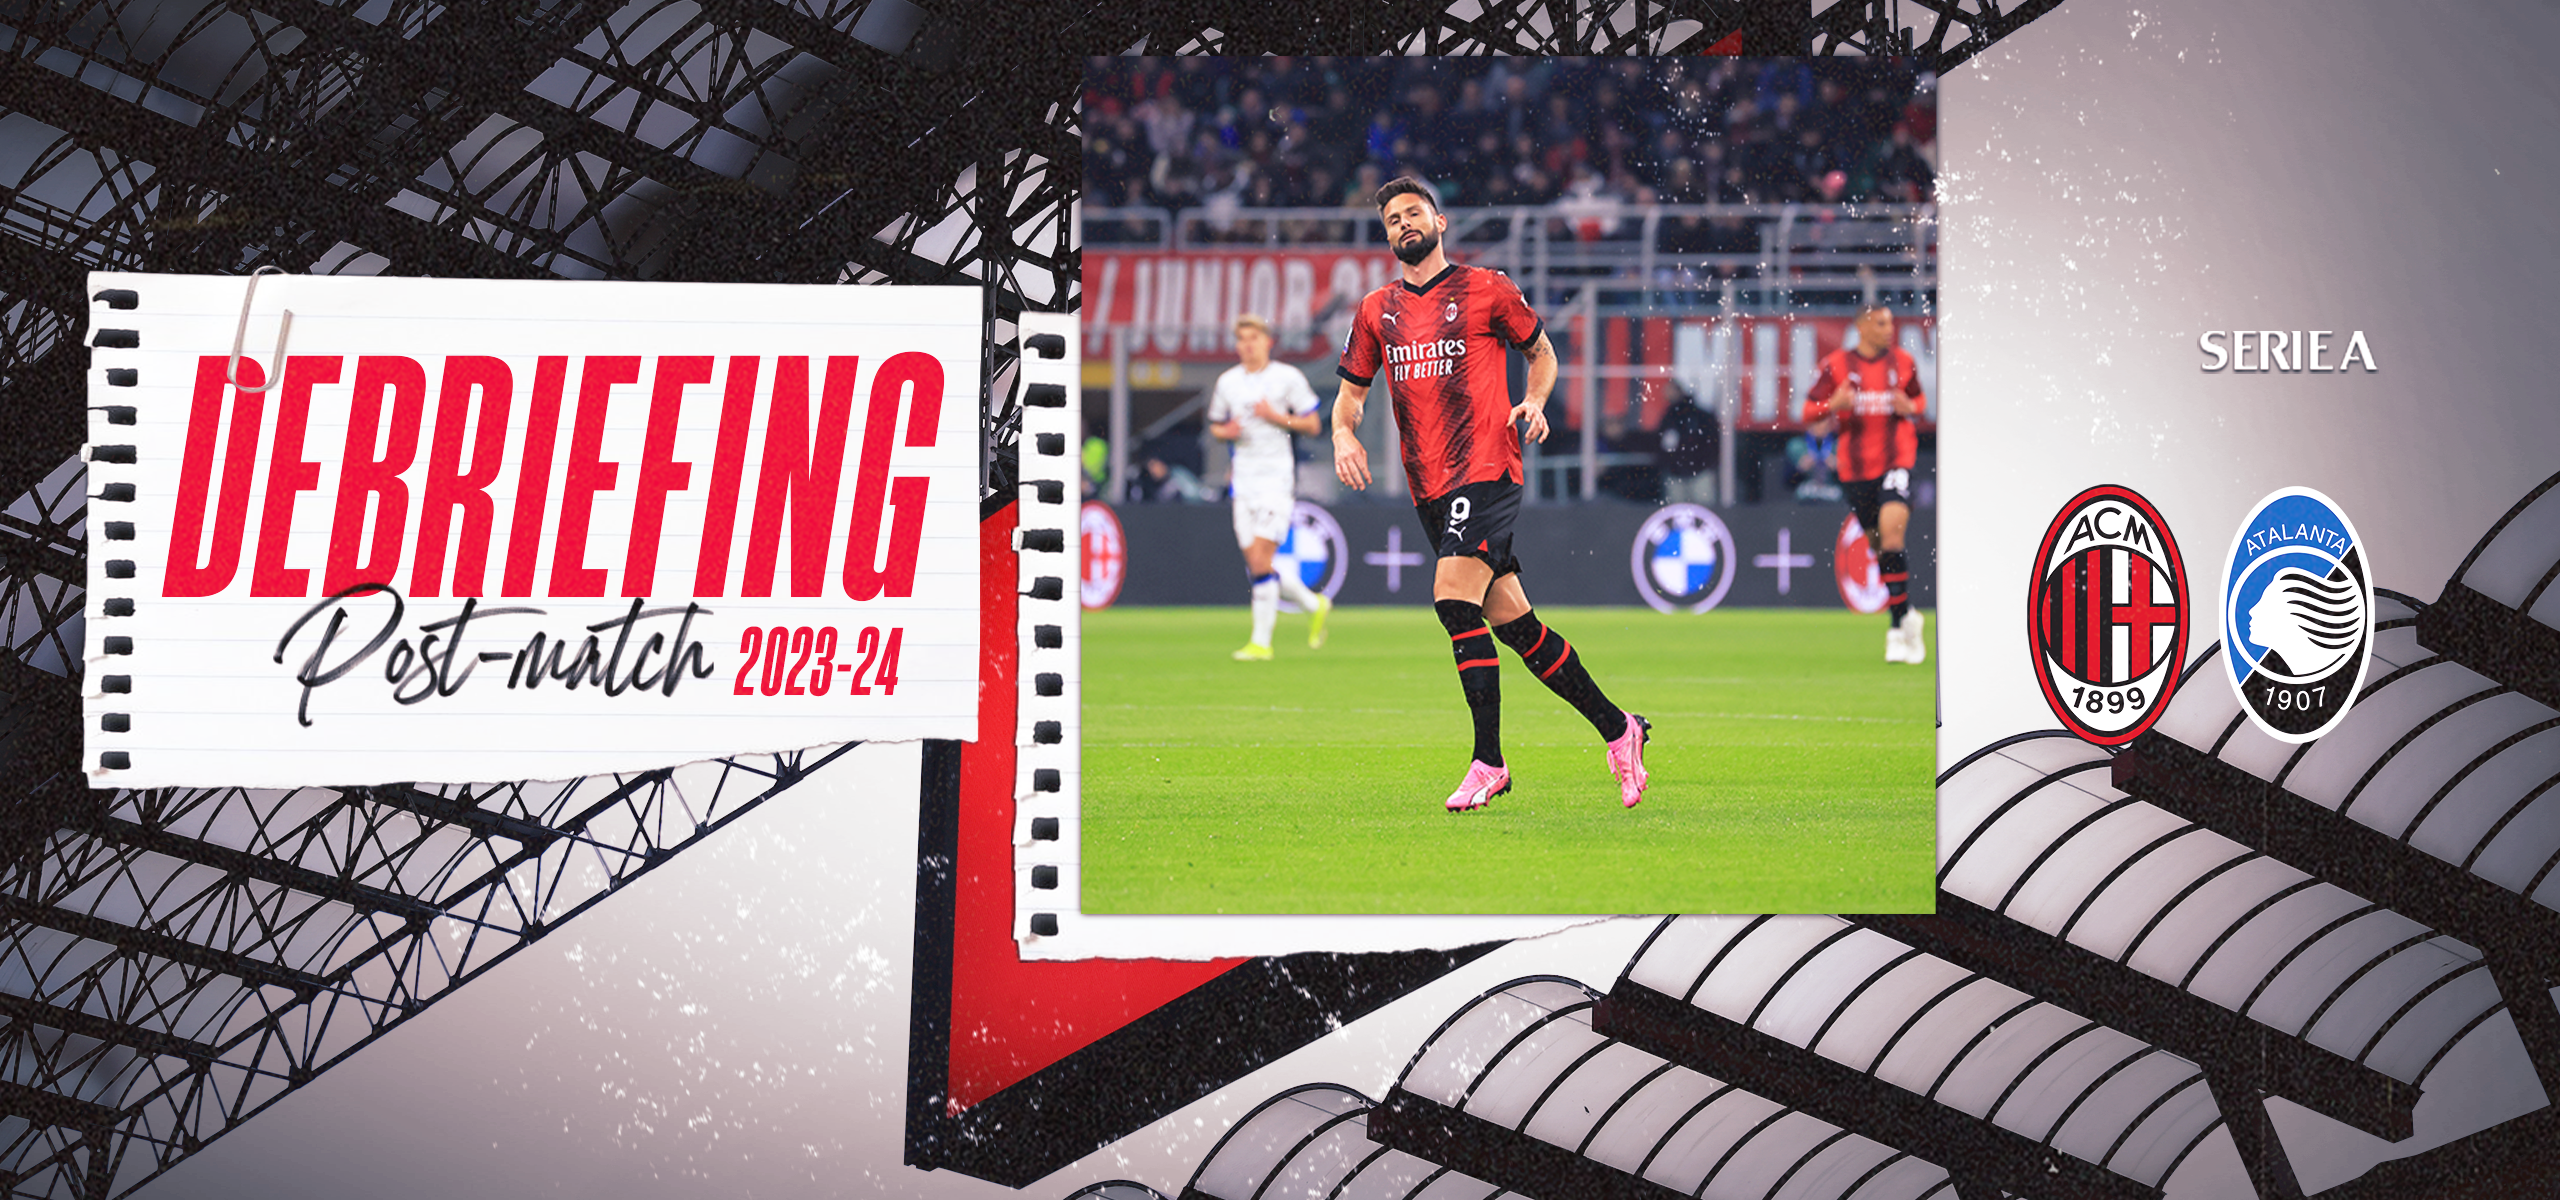 AC Milan News, Transfer News, Match Reports and Analysis